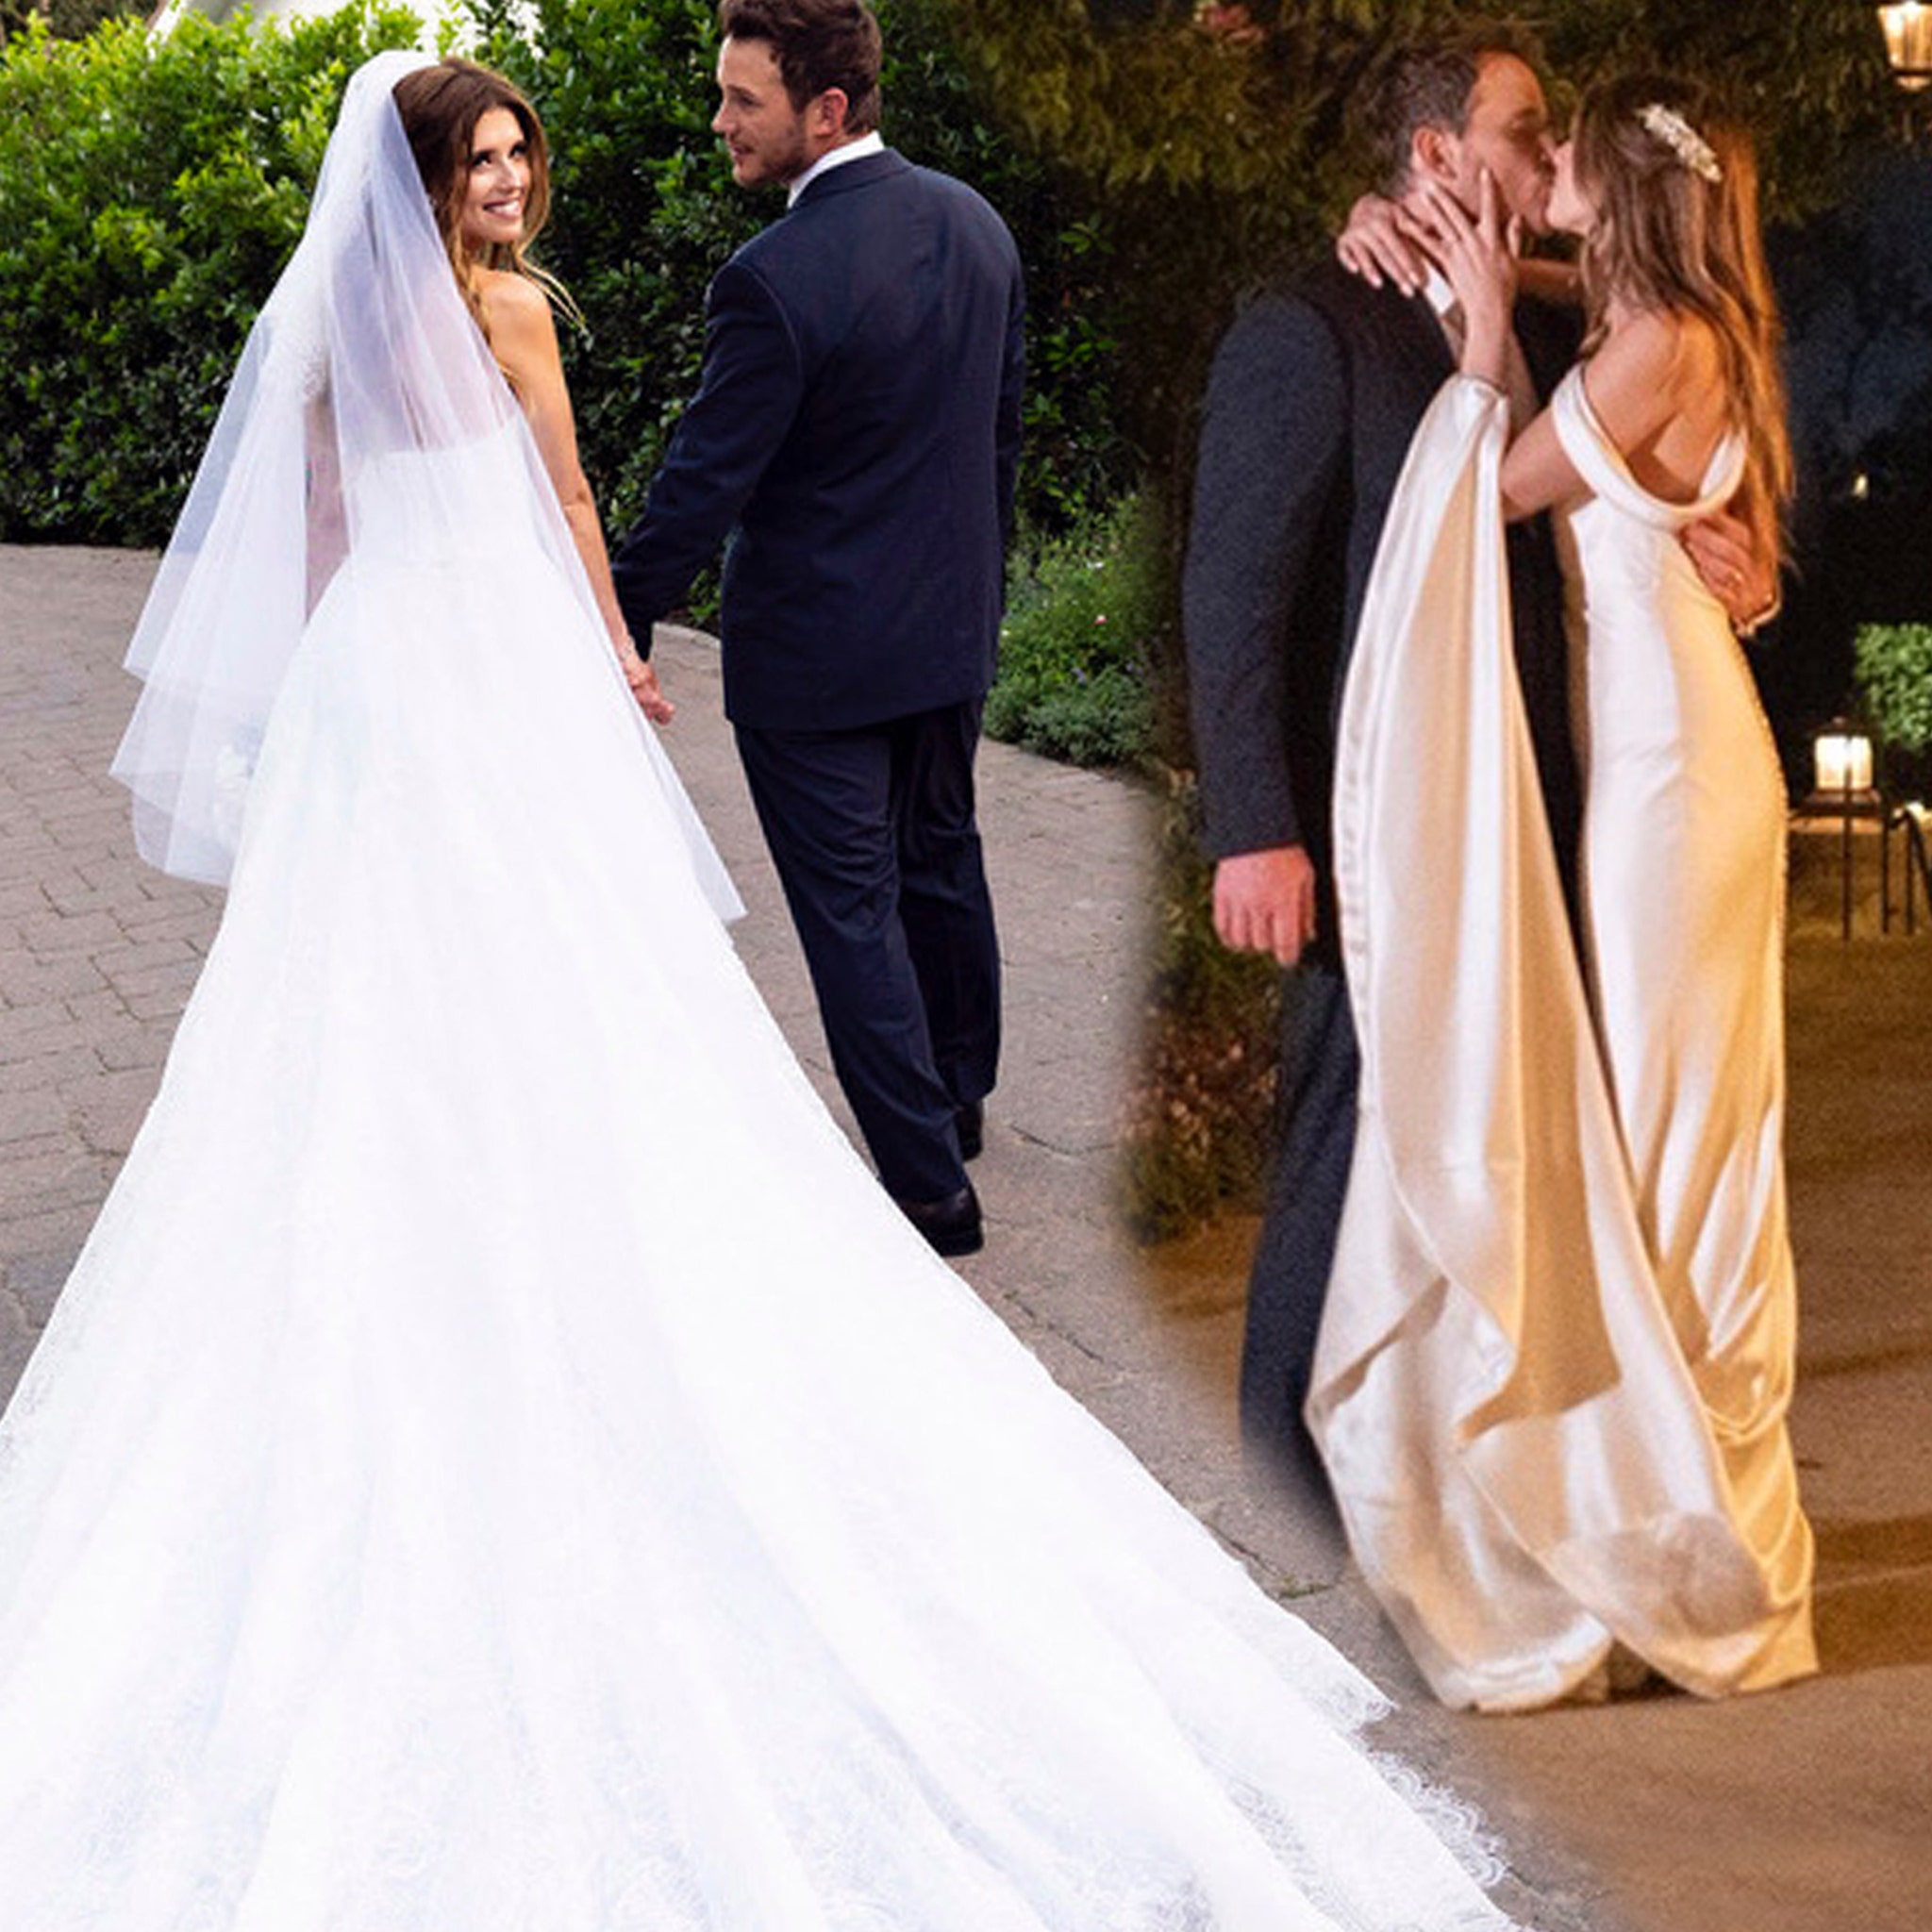 Chris Pratt and Katherine Schwarzenegger's Wedding Day Looks from Armani